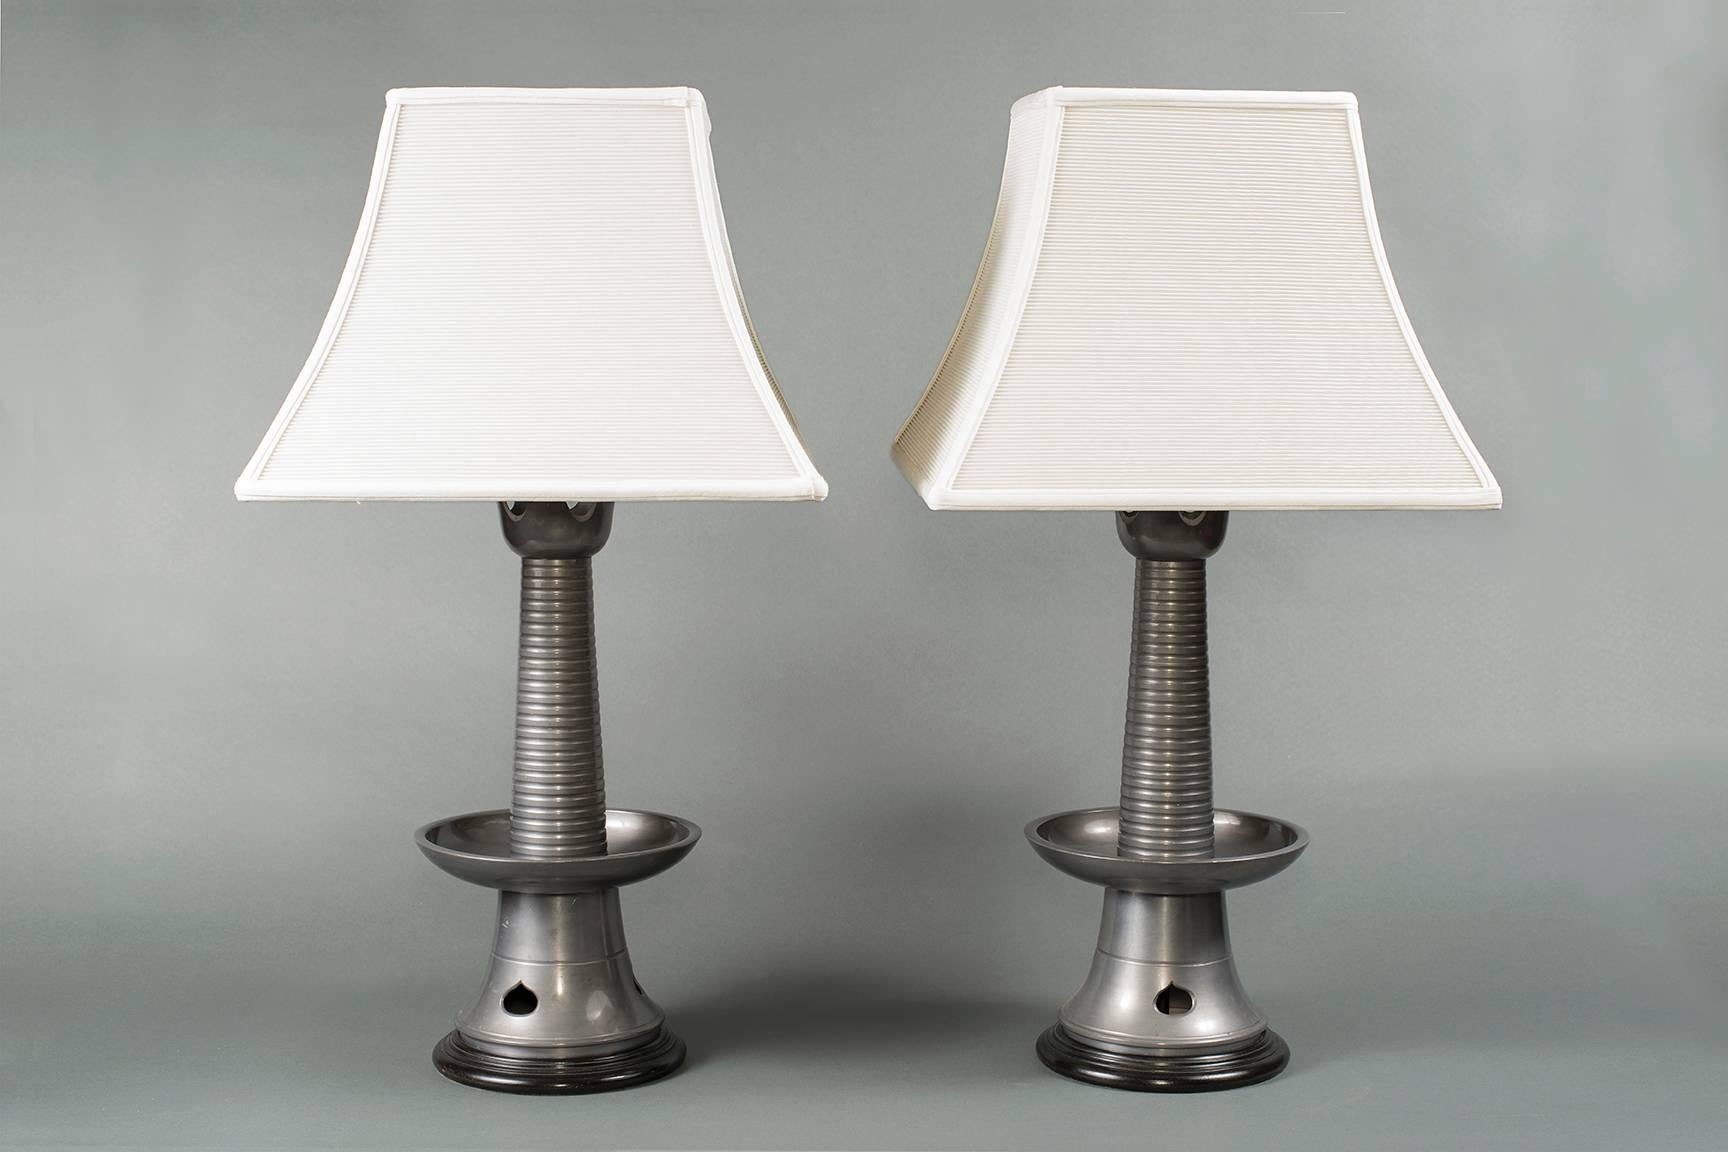 Pair of Japanese pewter lamps.

Pair of Japanese pewter lamps,
Japan,
circa 1950.
Measures: 20